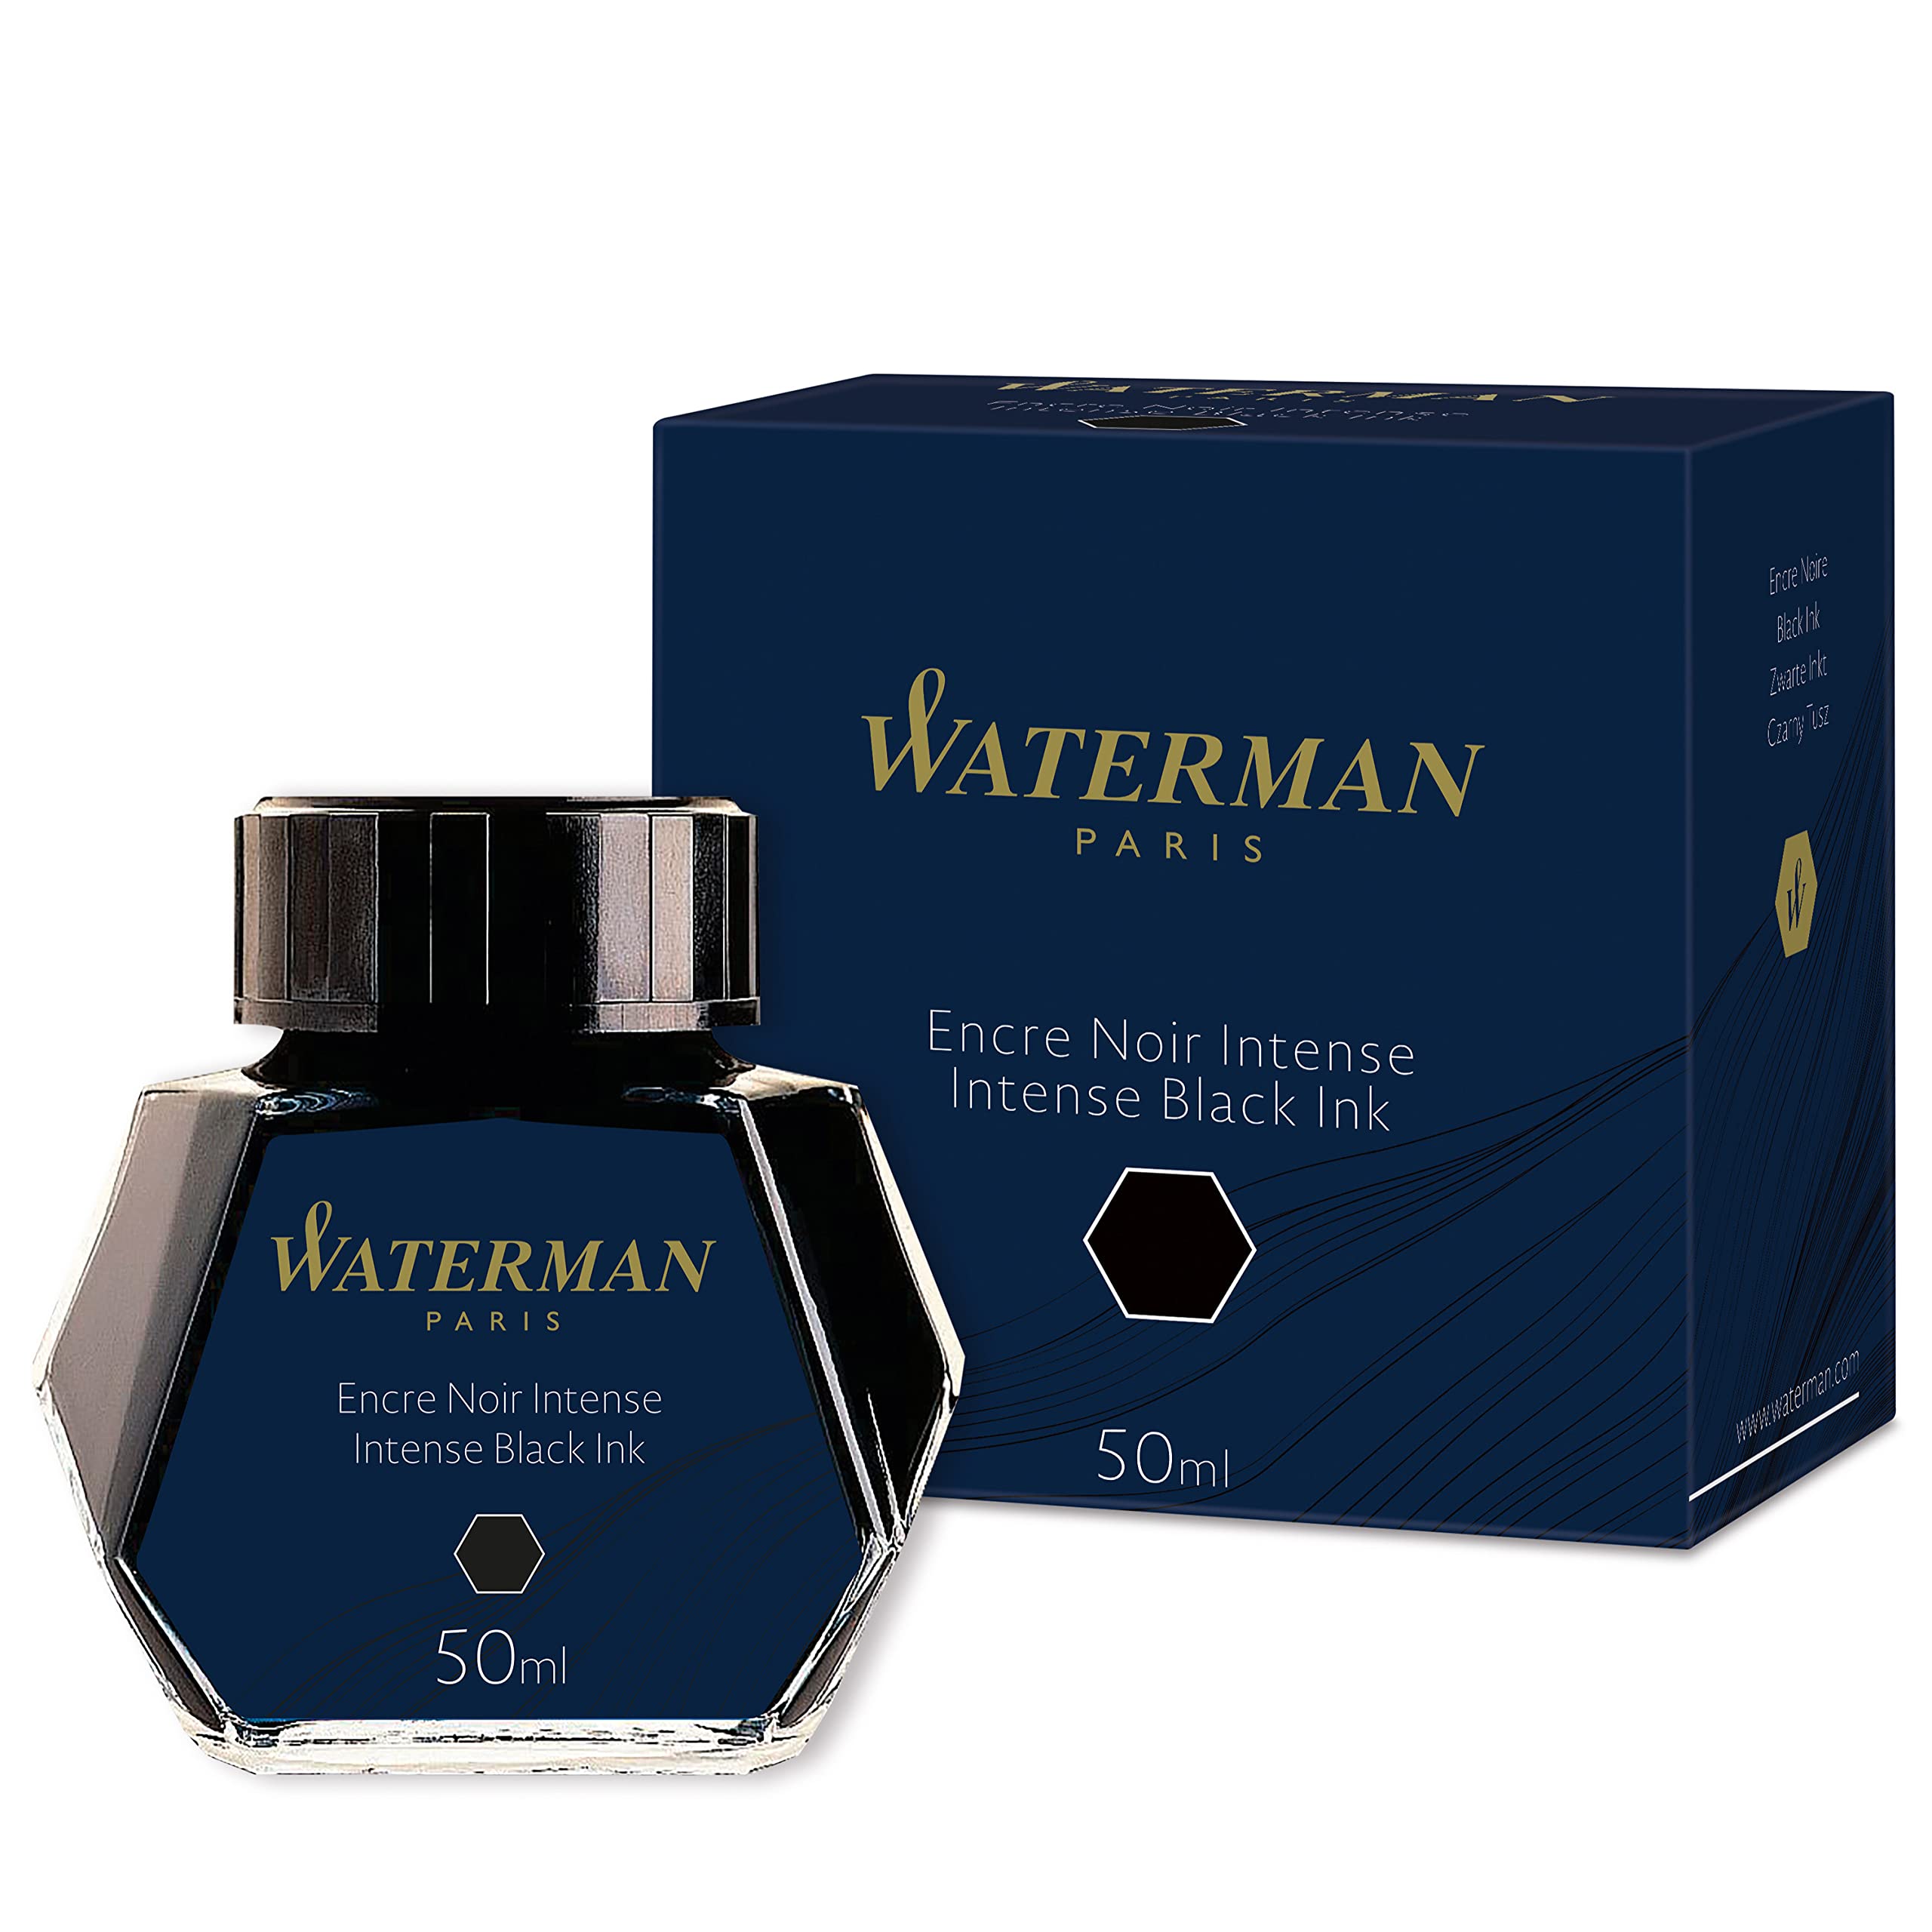 Waterman 50ml Ink Bottle for Fountain Pens - Intense Black Ink